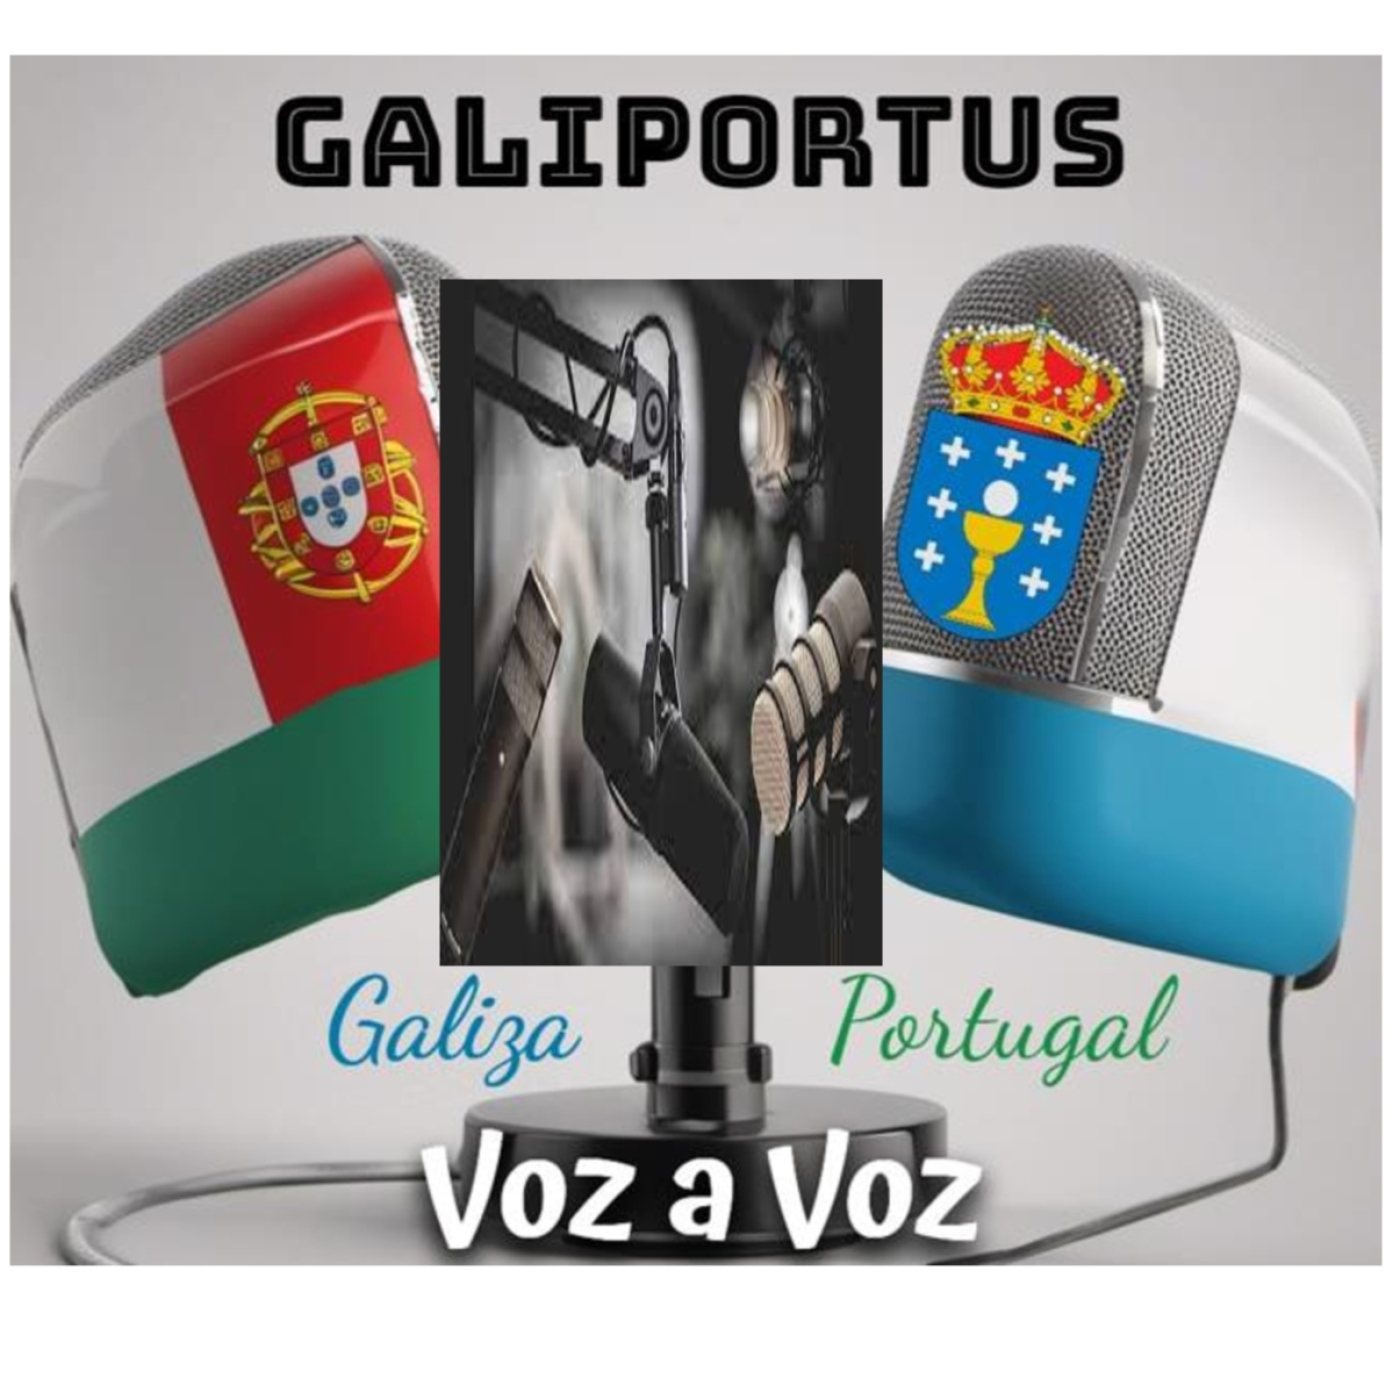 Galiportus Ep. 32- Dia Internacional da Radio